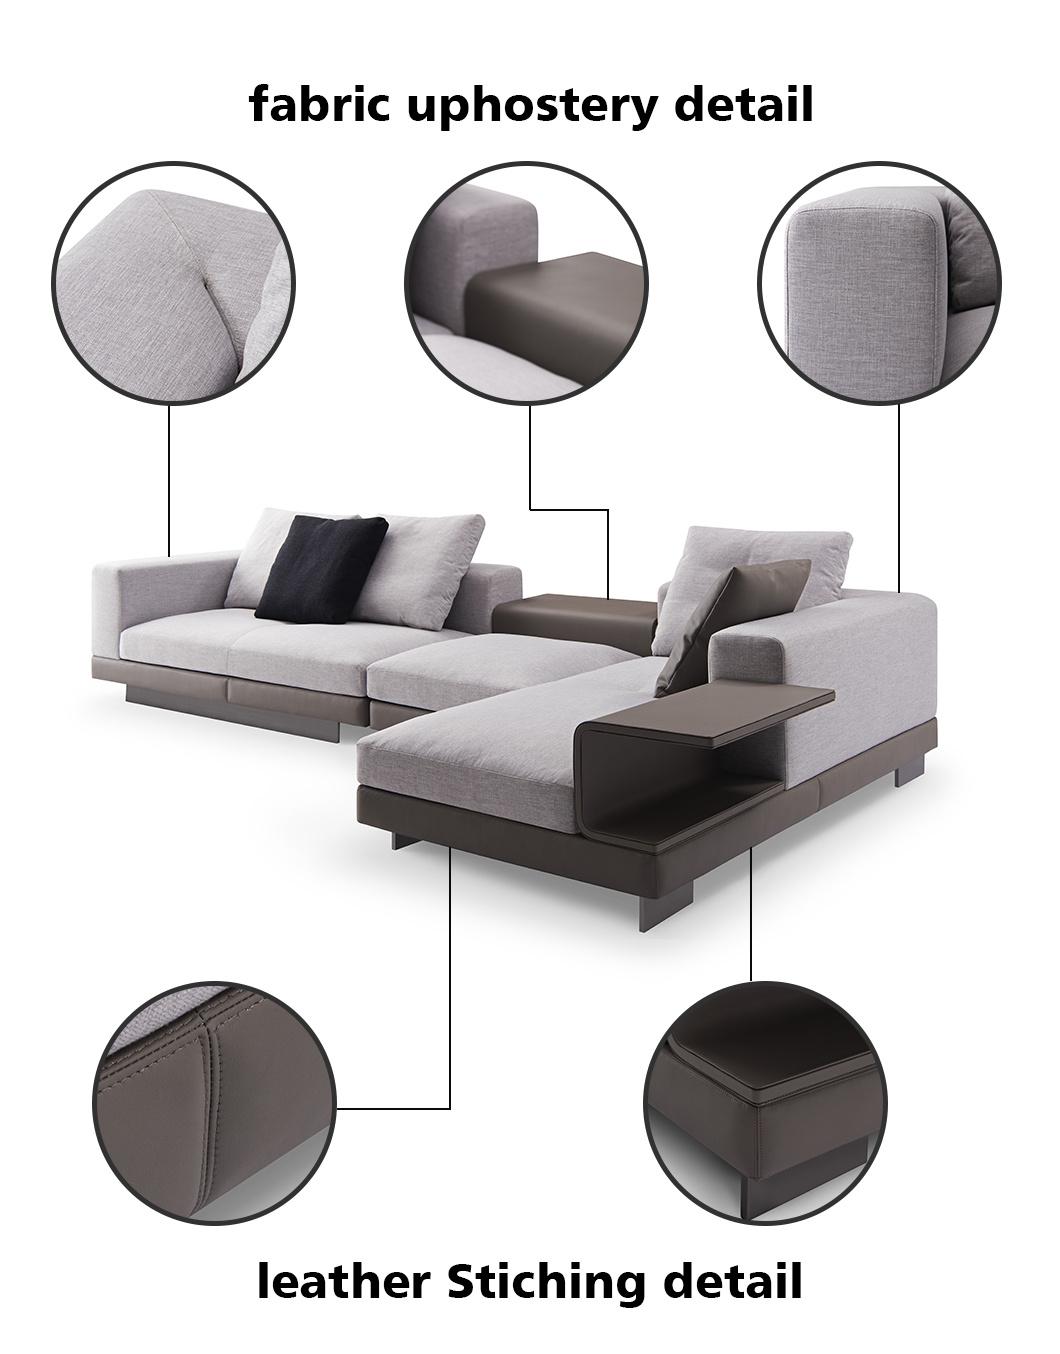 Living Room Furniture New Corner L Shaped Sofa Couch Set Luxury Modern White L Shape Sofa Sectional Sofa